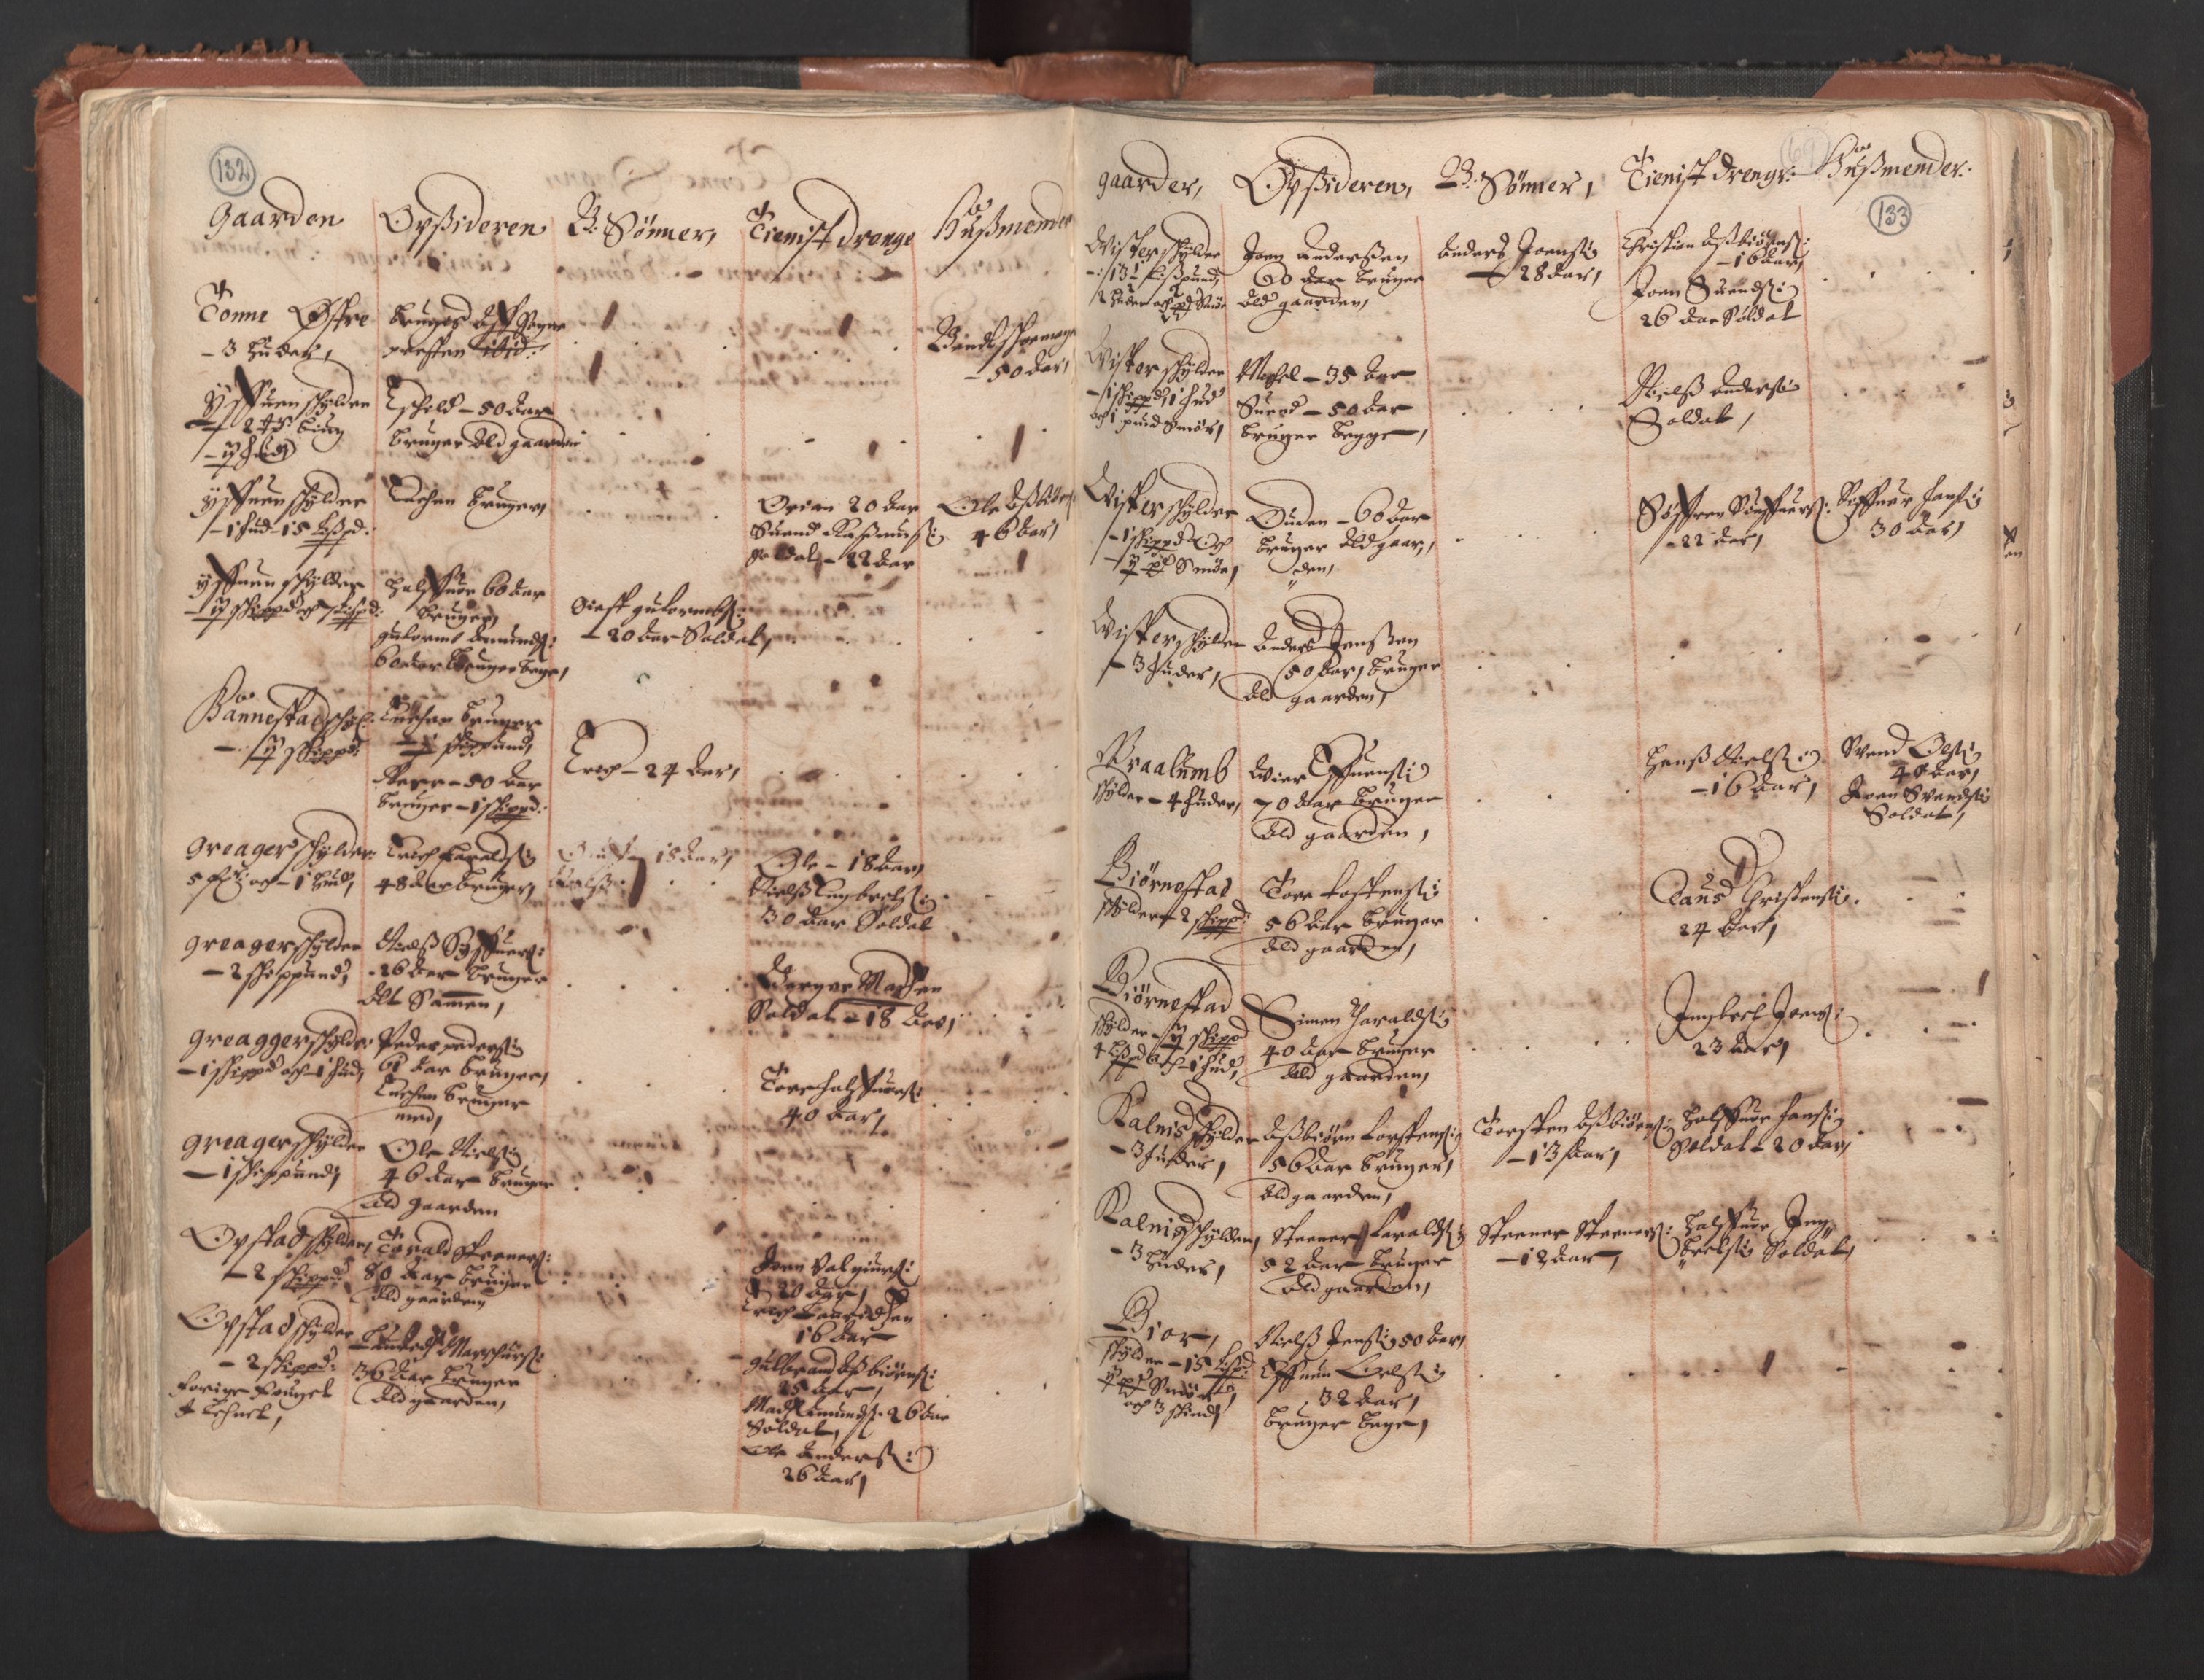 RA, Fogdenes og sorenskrivernes manntall 1664-1666, nr. 1: Fogderier (len og skipreider) i nåværende Østfold fylke, 1664, s. 132-133